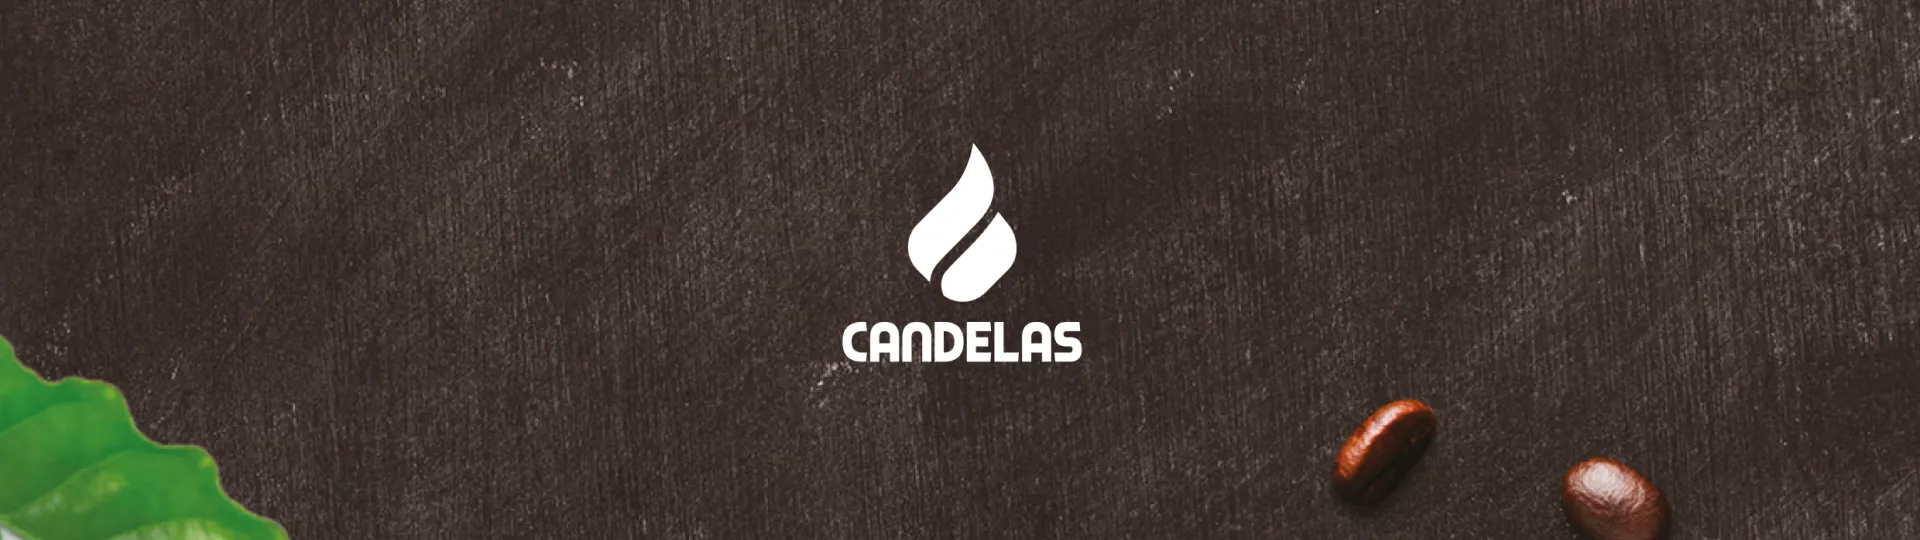 Candelas-portugal